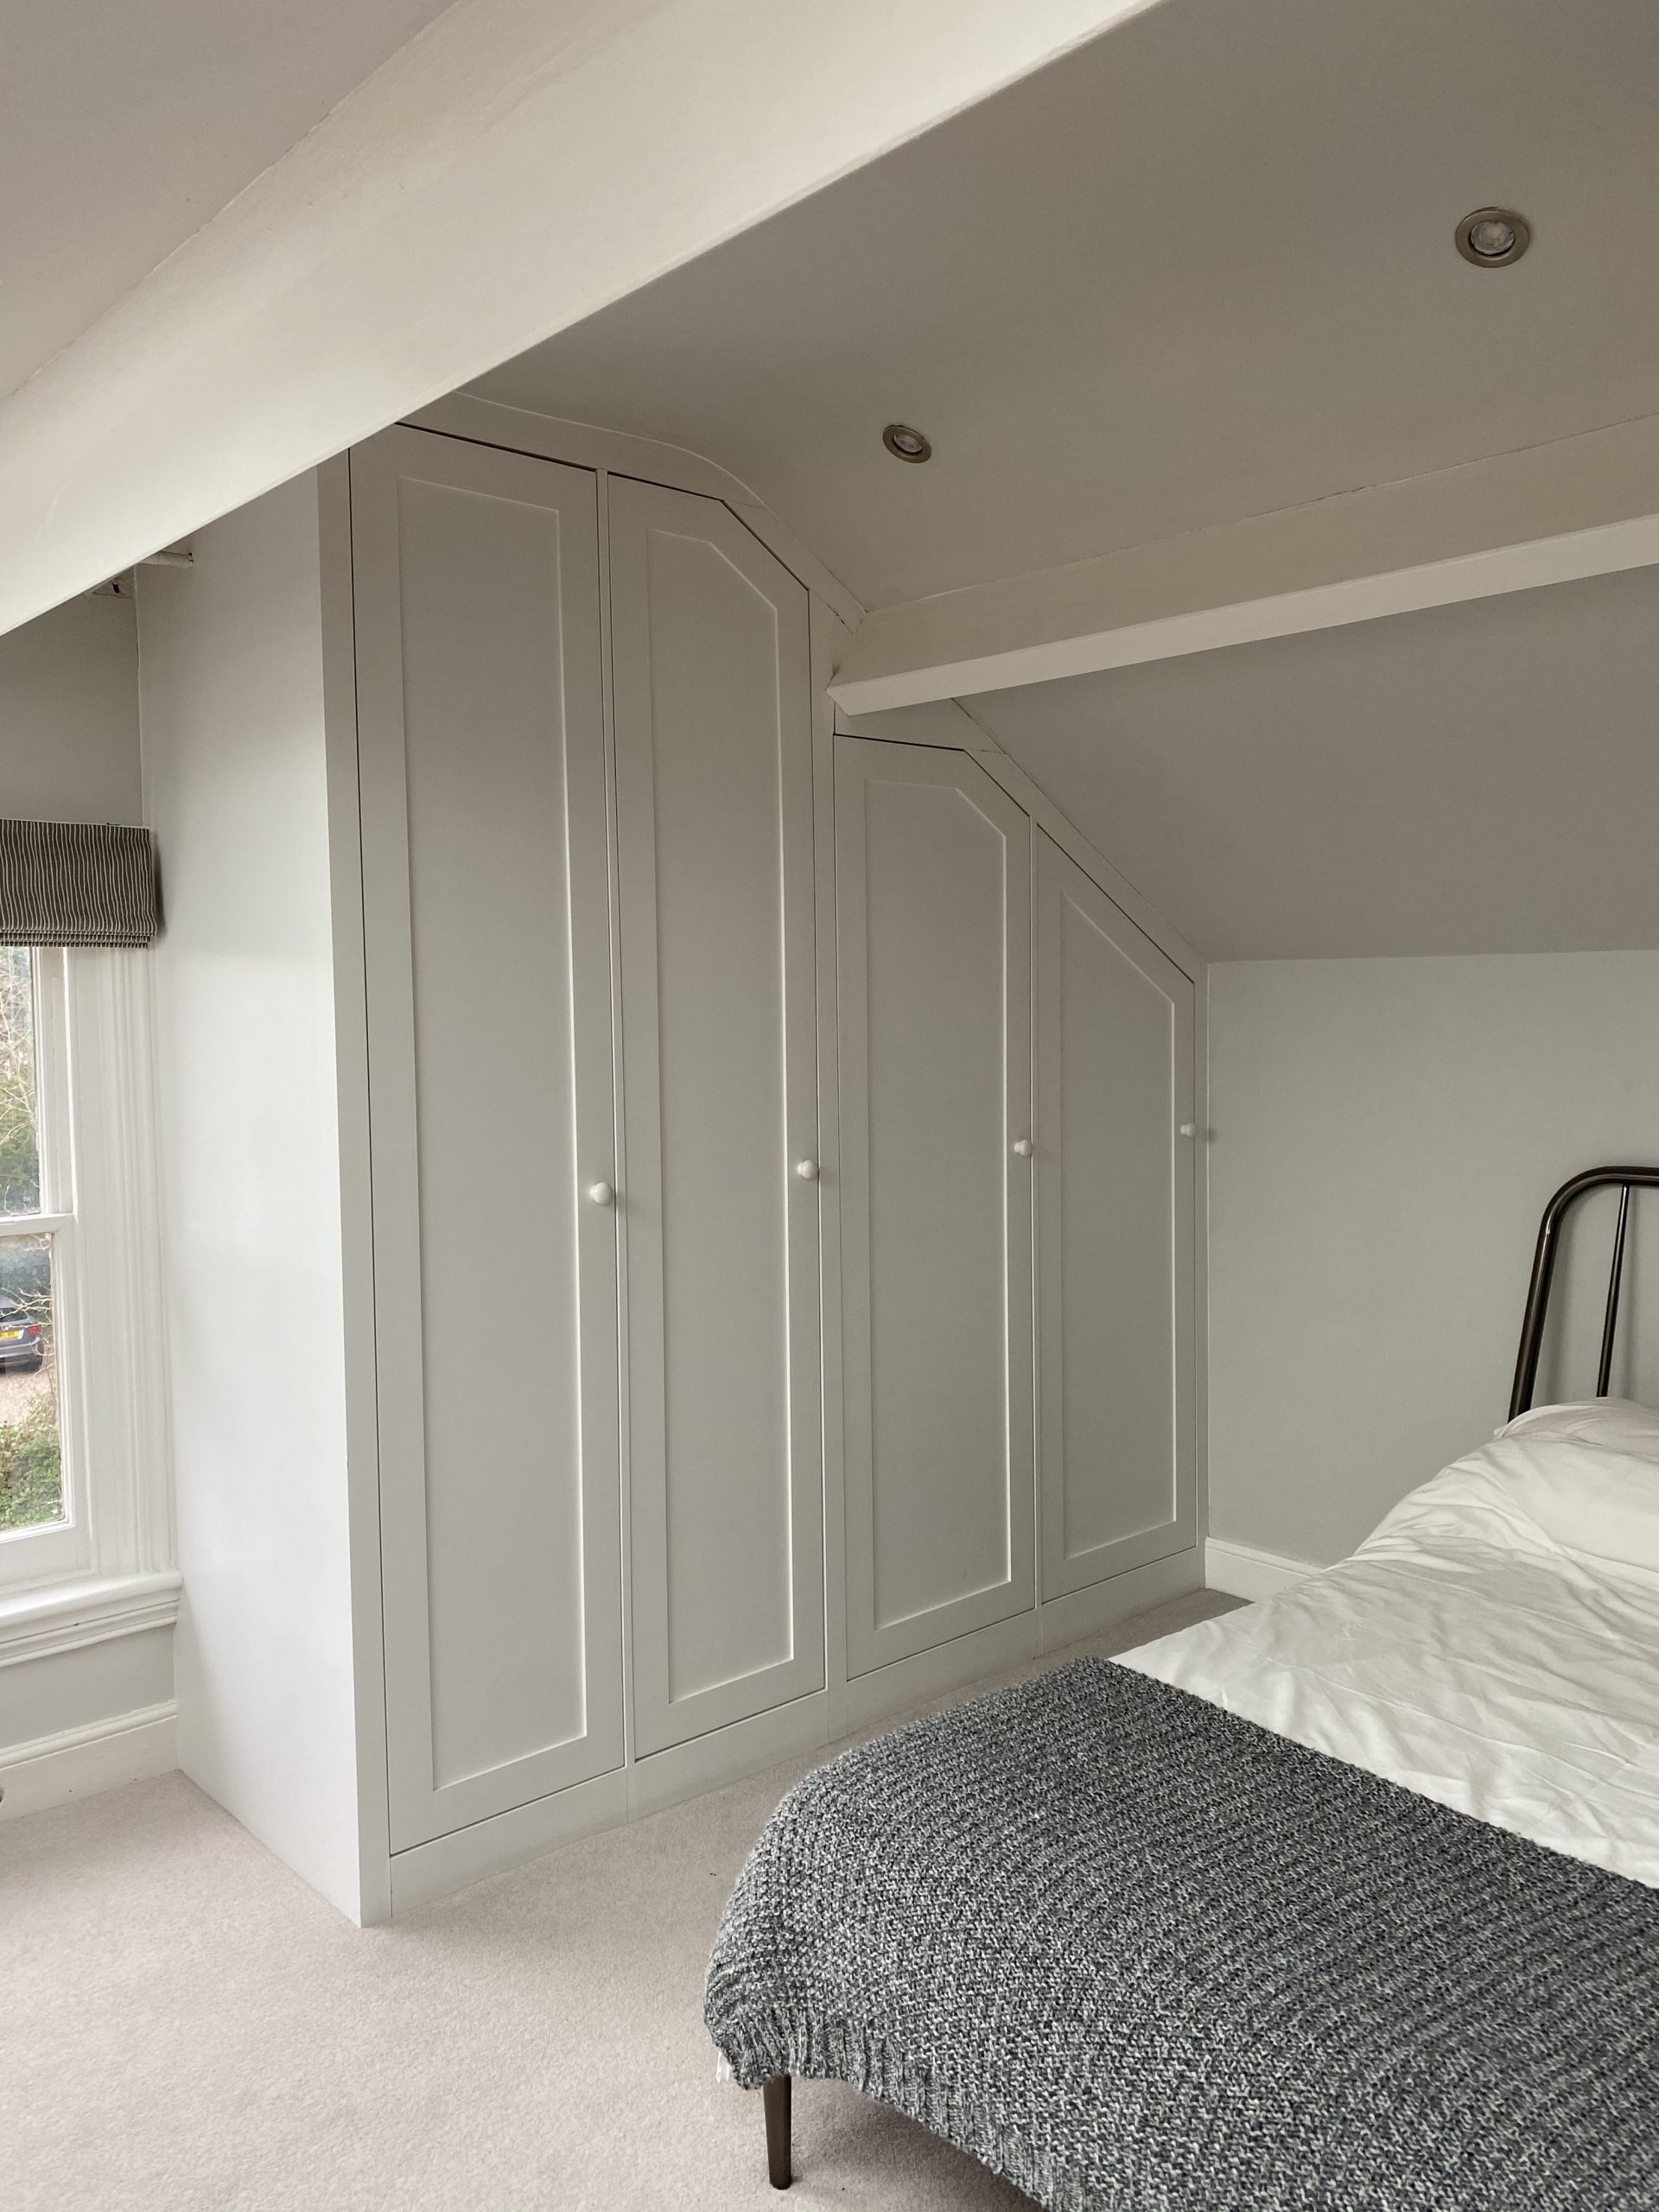 Small bedroom design ideas - James Mayor Home